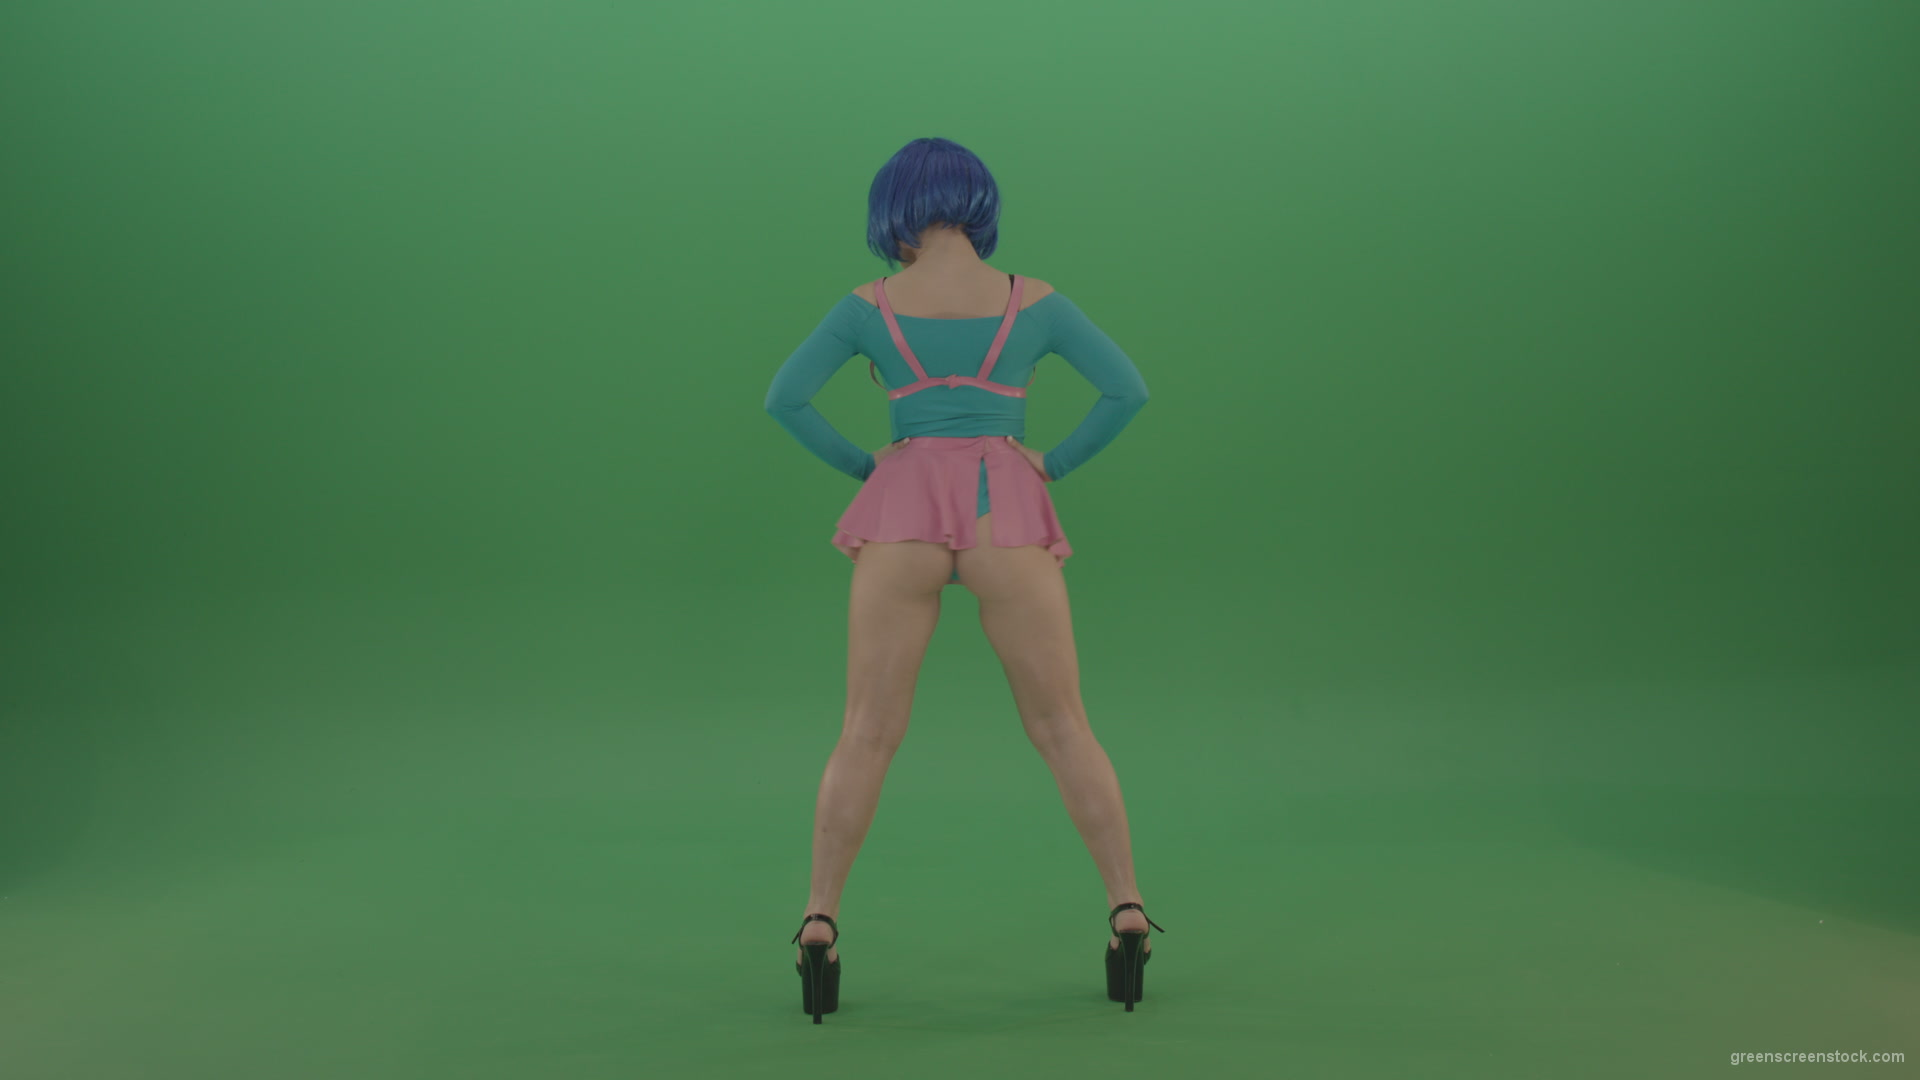 Beauty-Girl-dancing-Go-Go-Strip-Dance-shaking-ass-on-gren-screen_007 Green Screen Stock